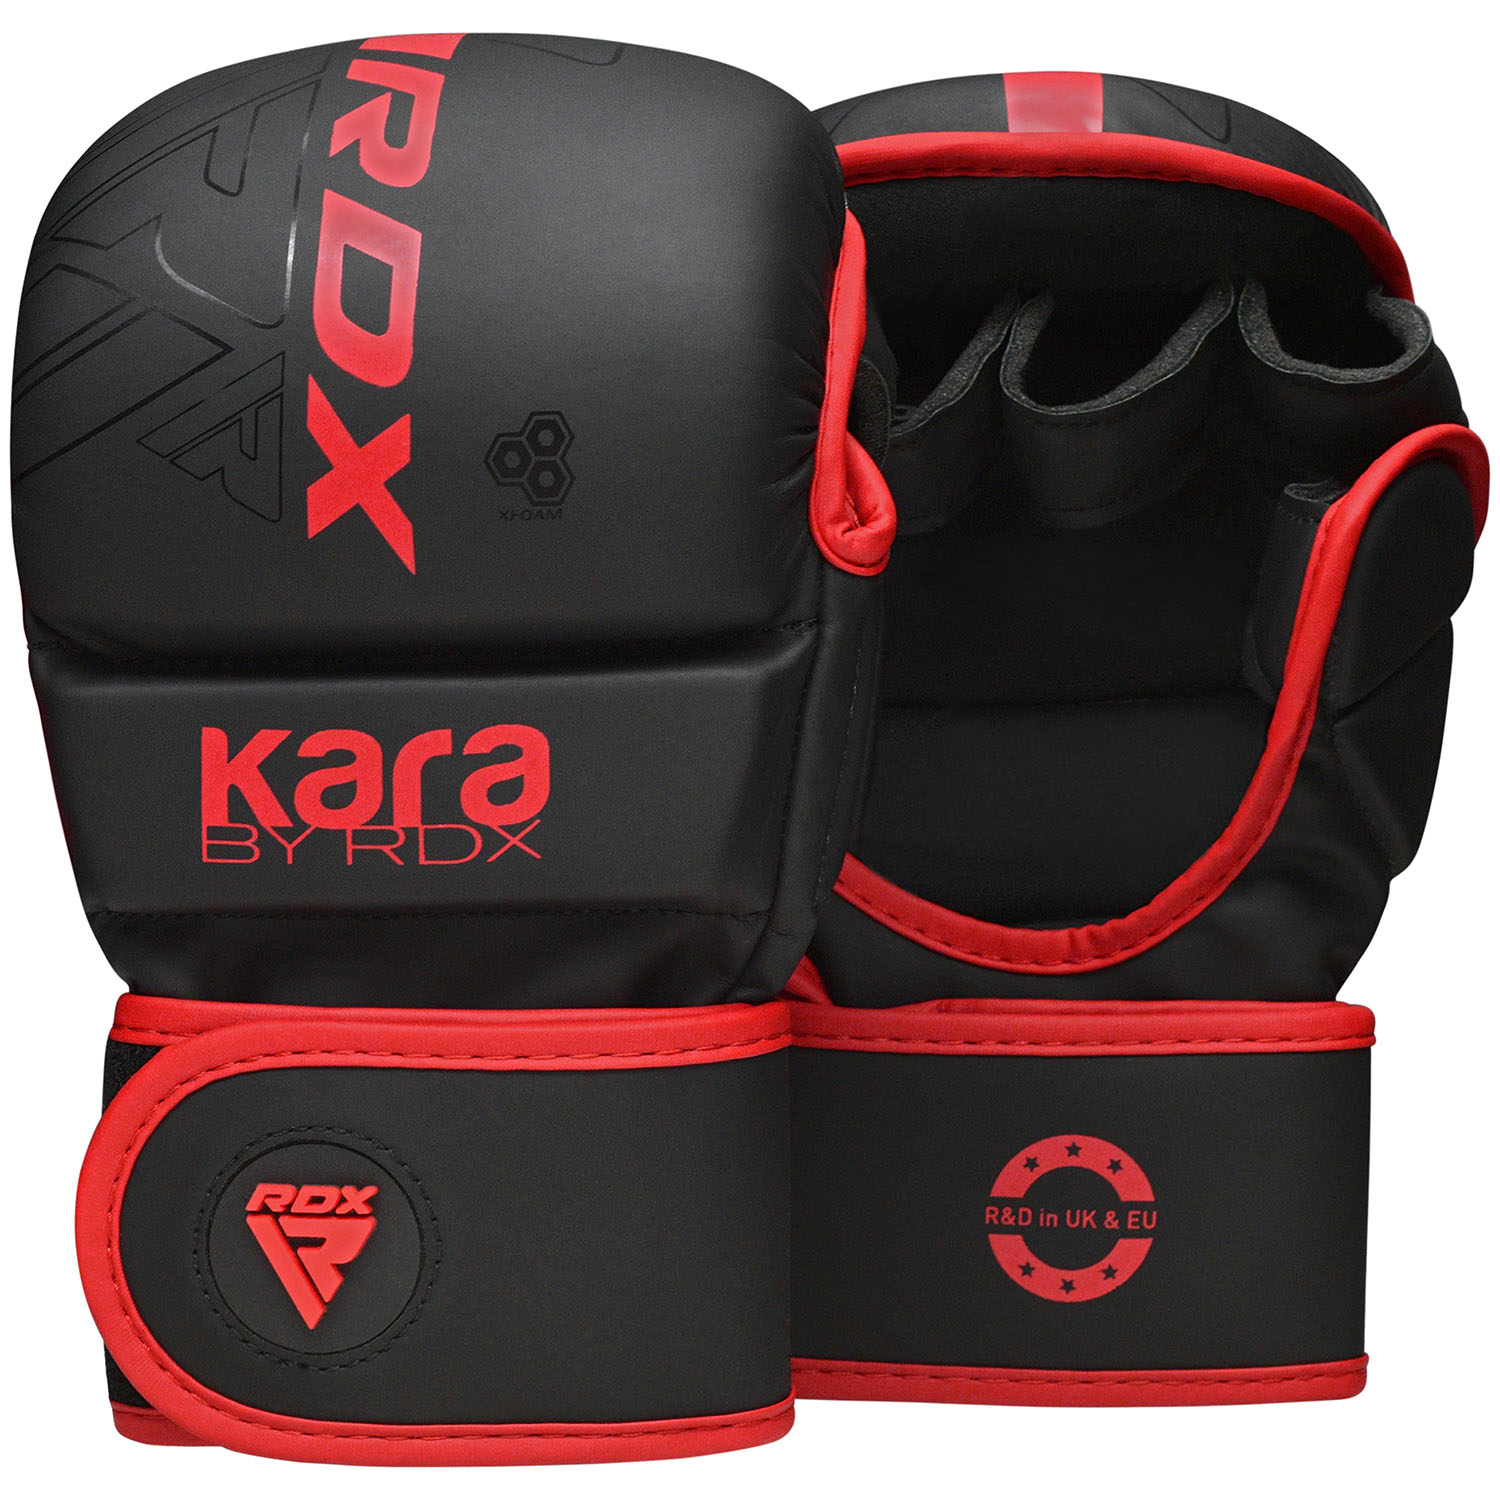 RDX MMA Sparring Boxing Gloves, Kara Series F6, black-red, S/M